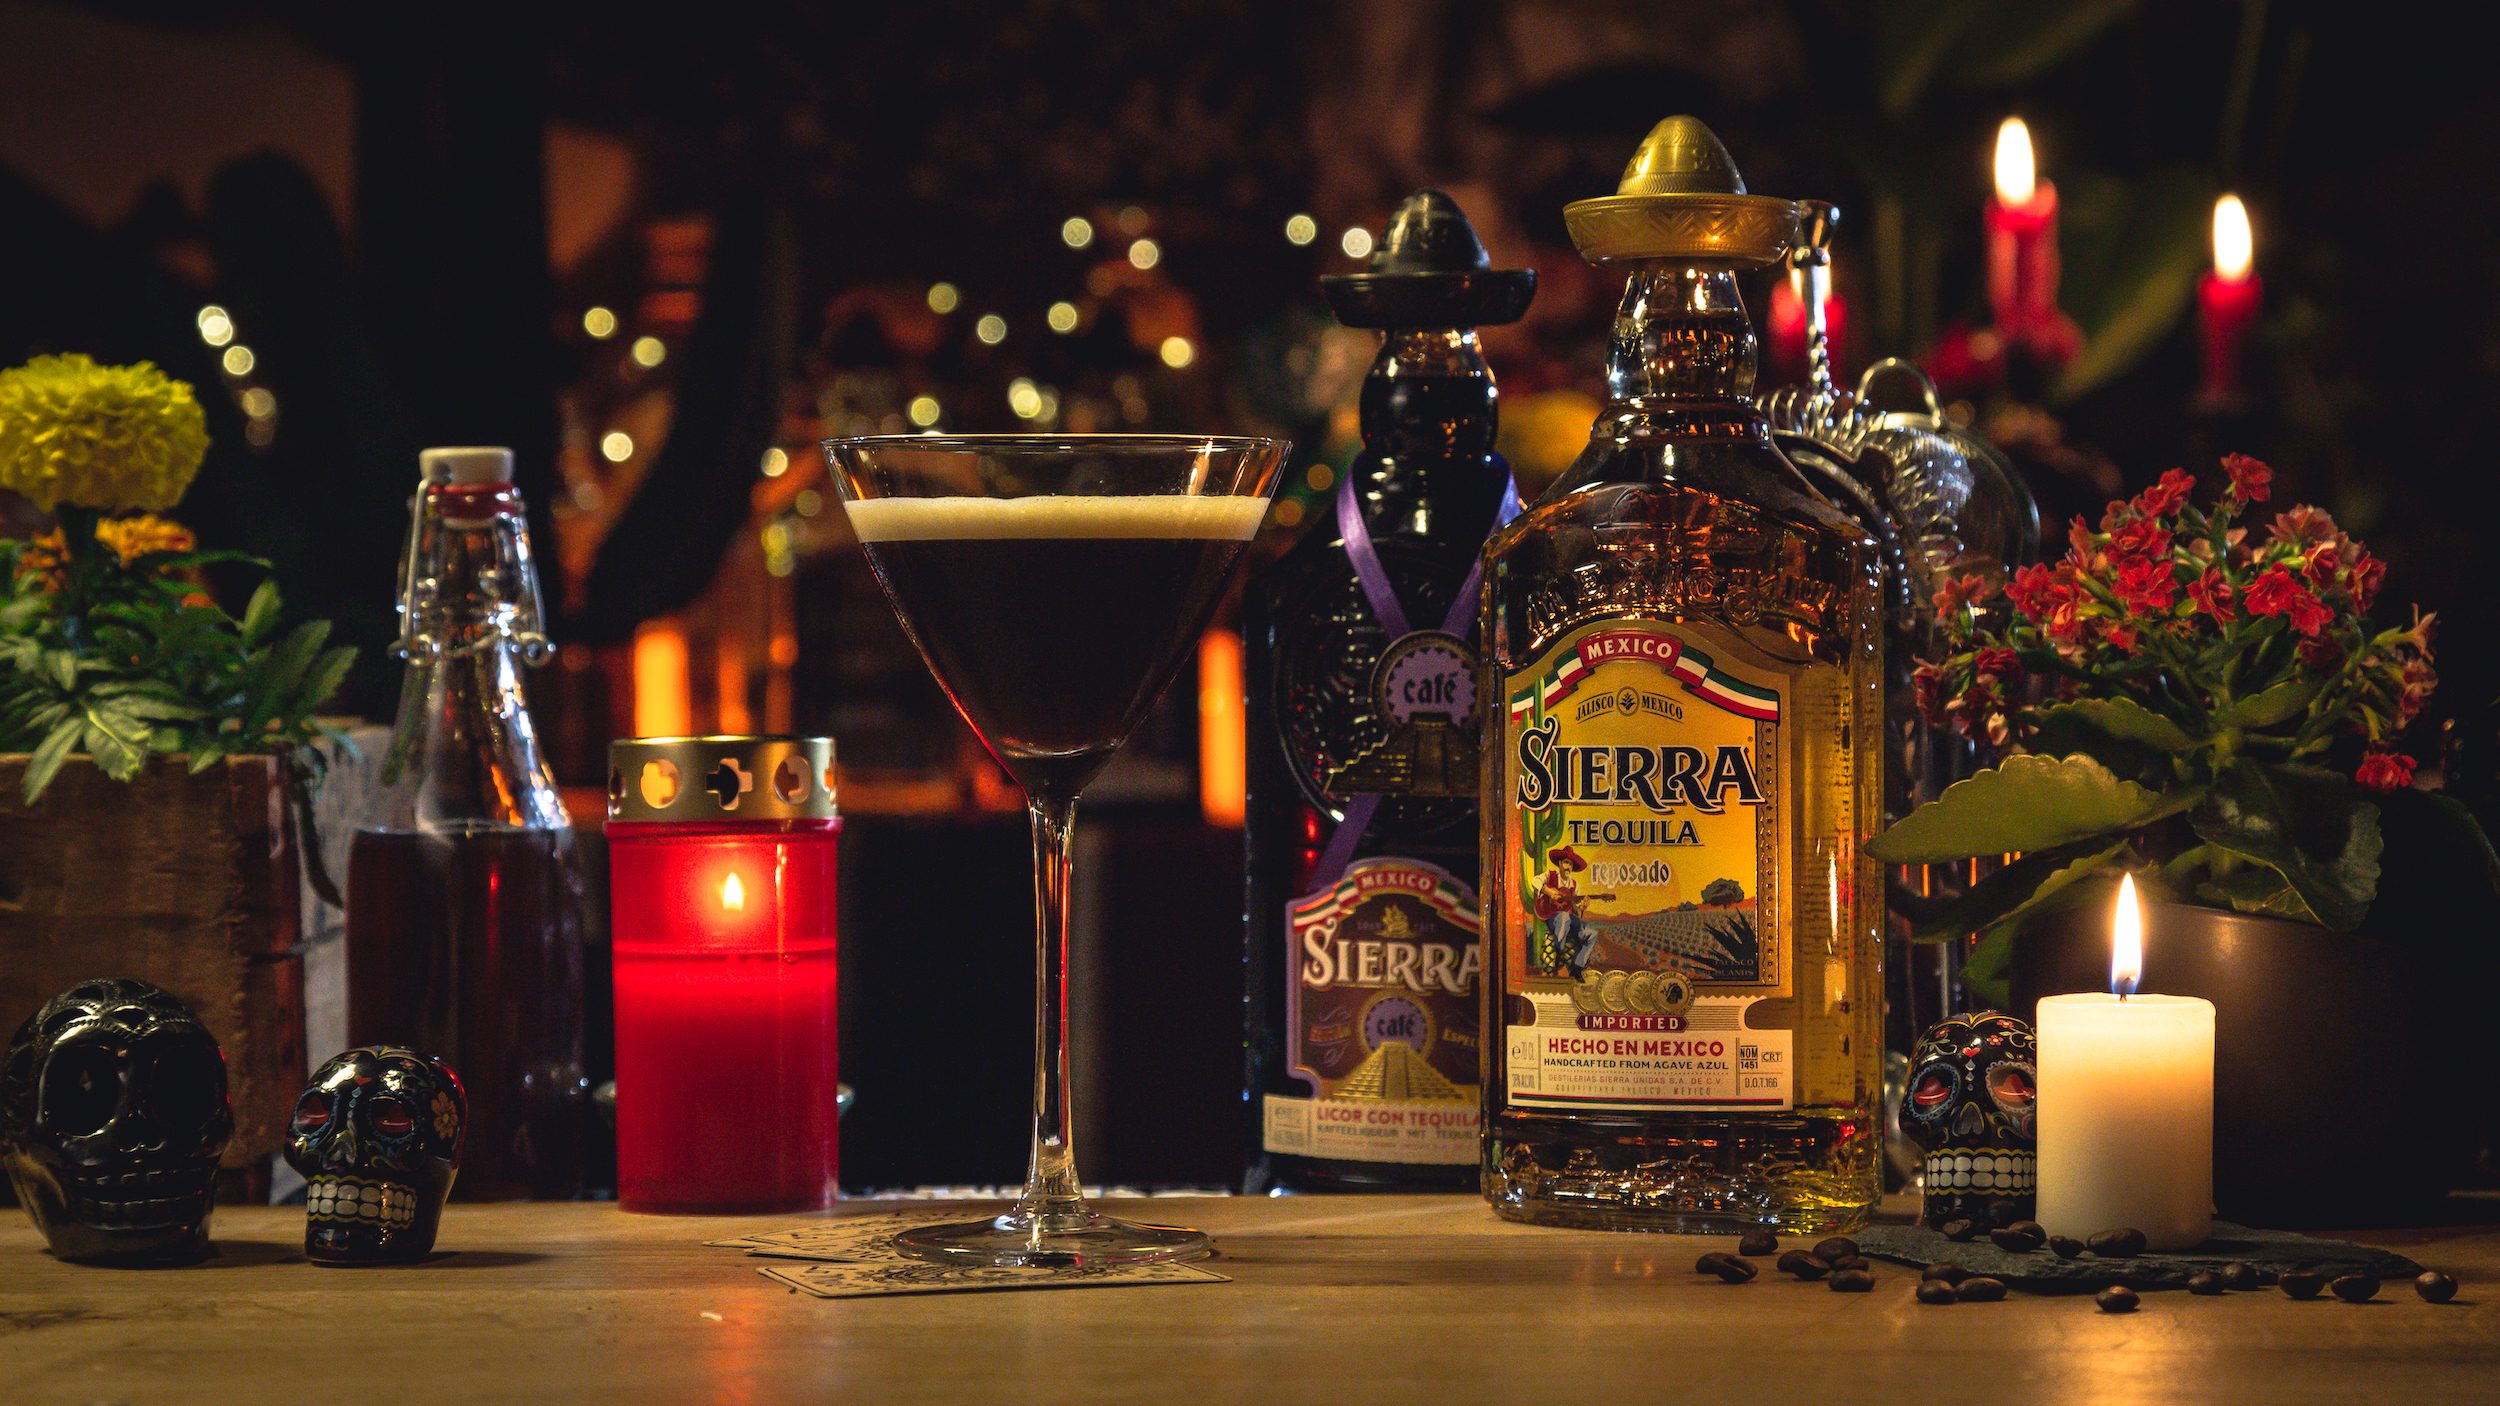 SIERRA-Tequila_DrinksRecipes_Drink-Moods_REPOSADO-Mexpresso-Martini.jpg